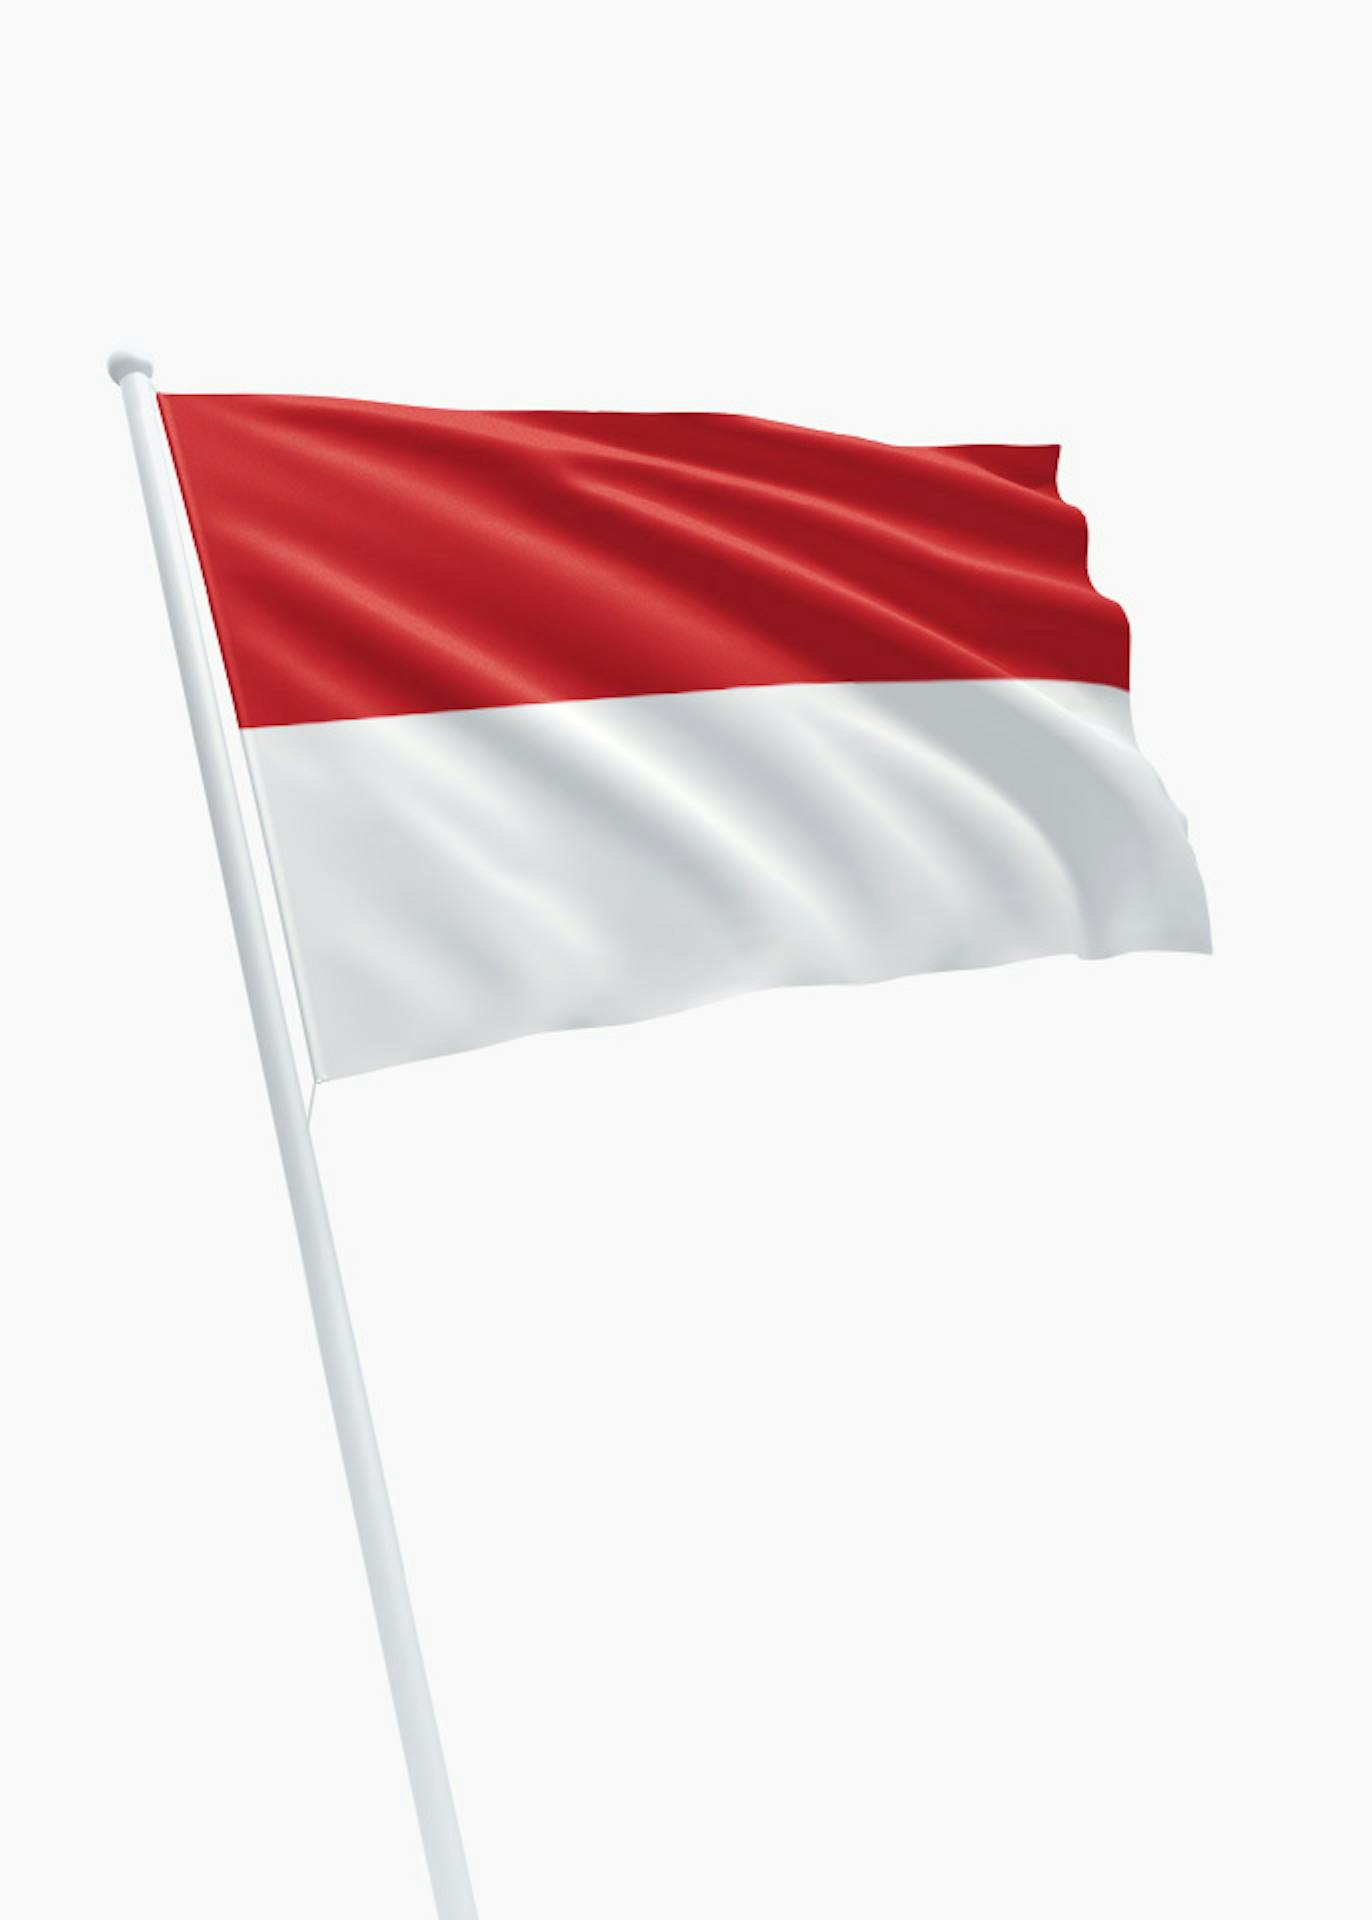 Indonesische vlag kopen? Dé specialist vlaggen! -